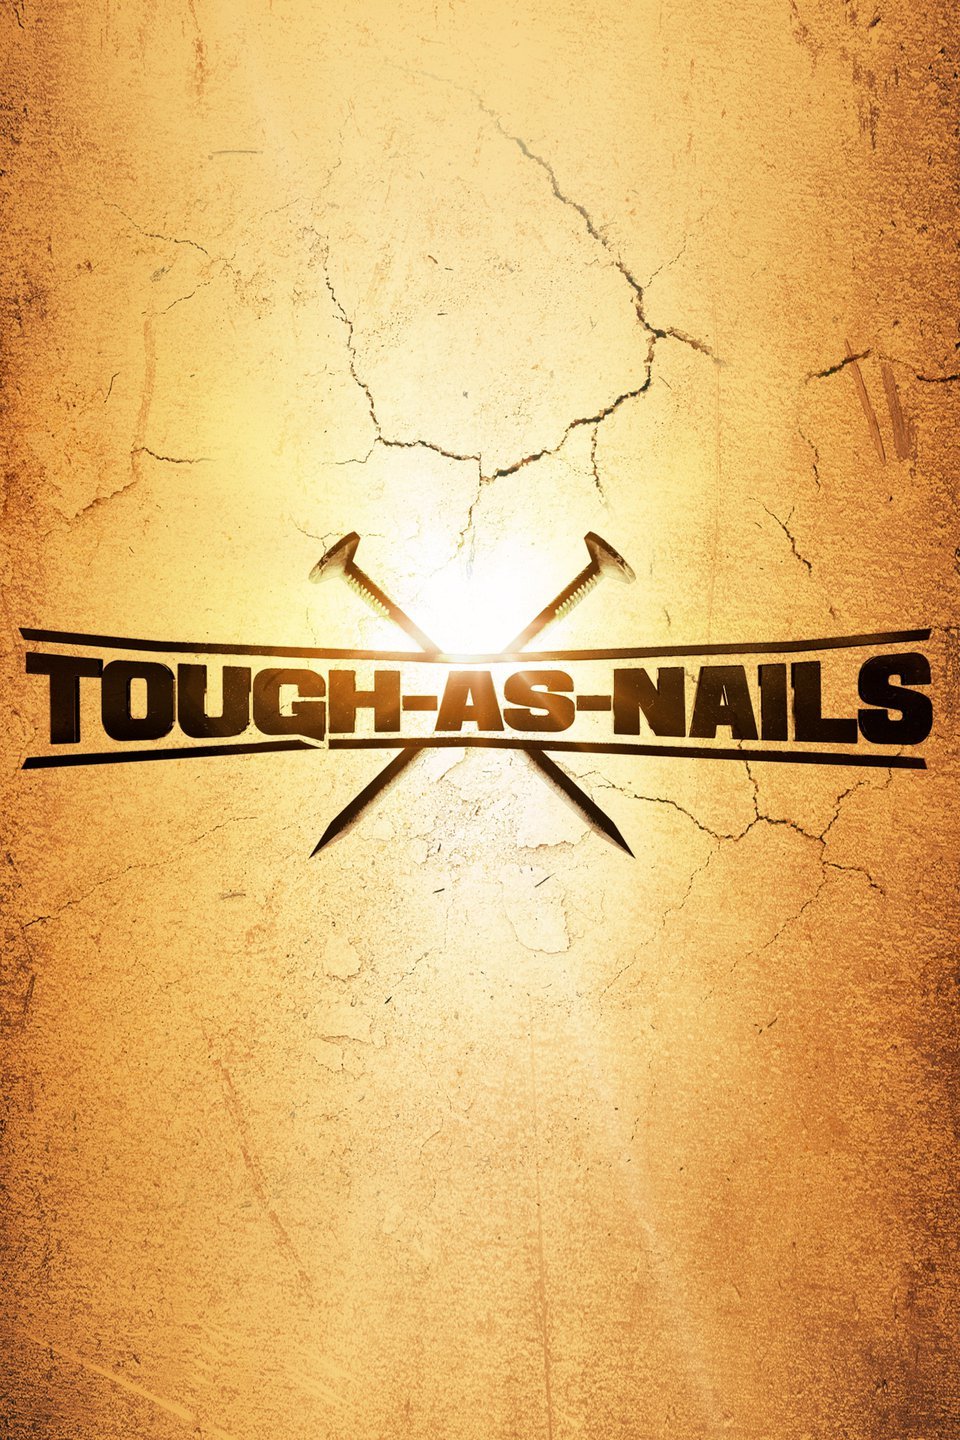 Local veteran wins over $200K on 'Tough as Nails' show | Sedalia Democrat